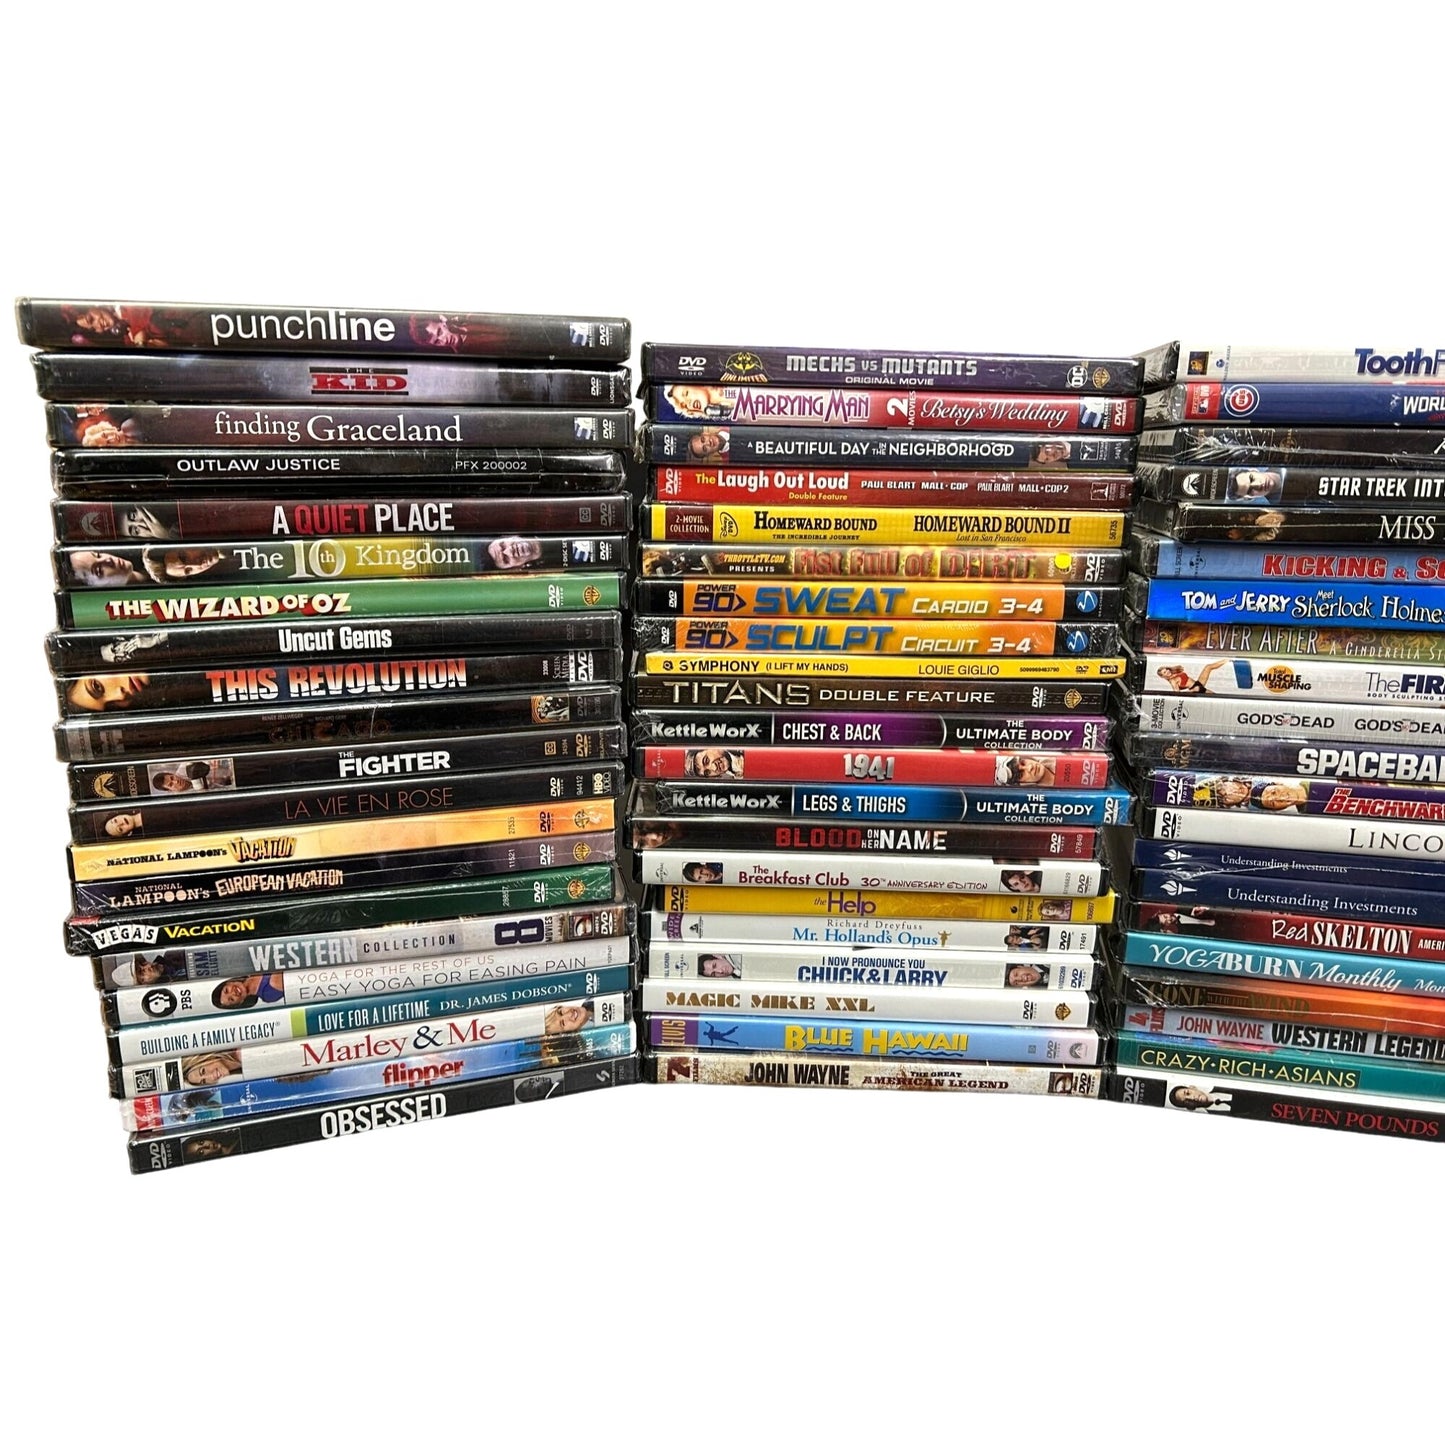 BULK LOT 102 Brand New Sealed DVDs Movies, TV, Documentaries Multi-Genre SG2-1